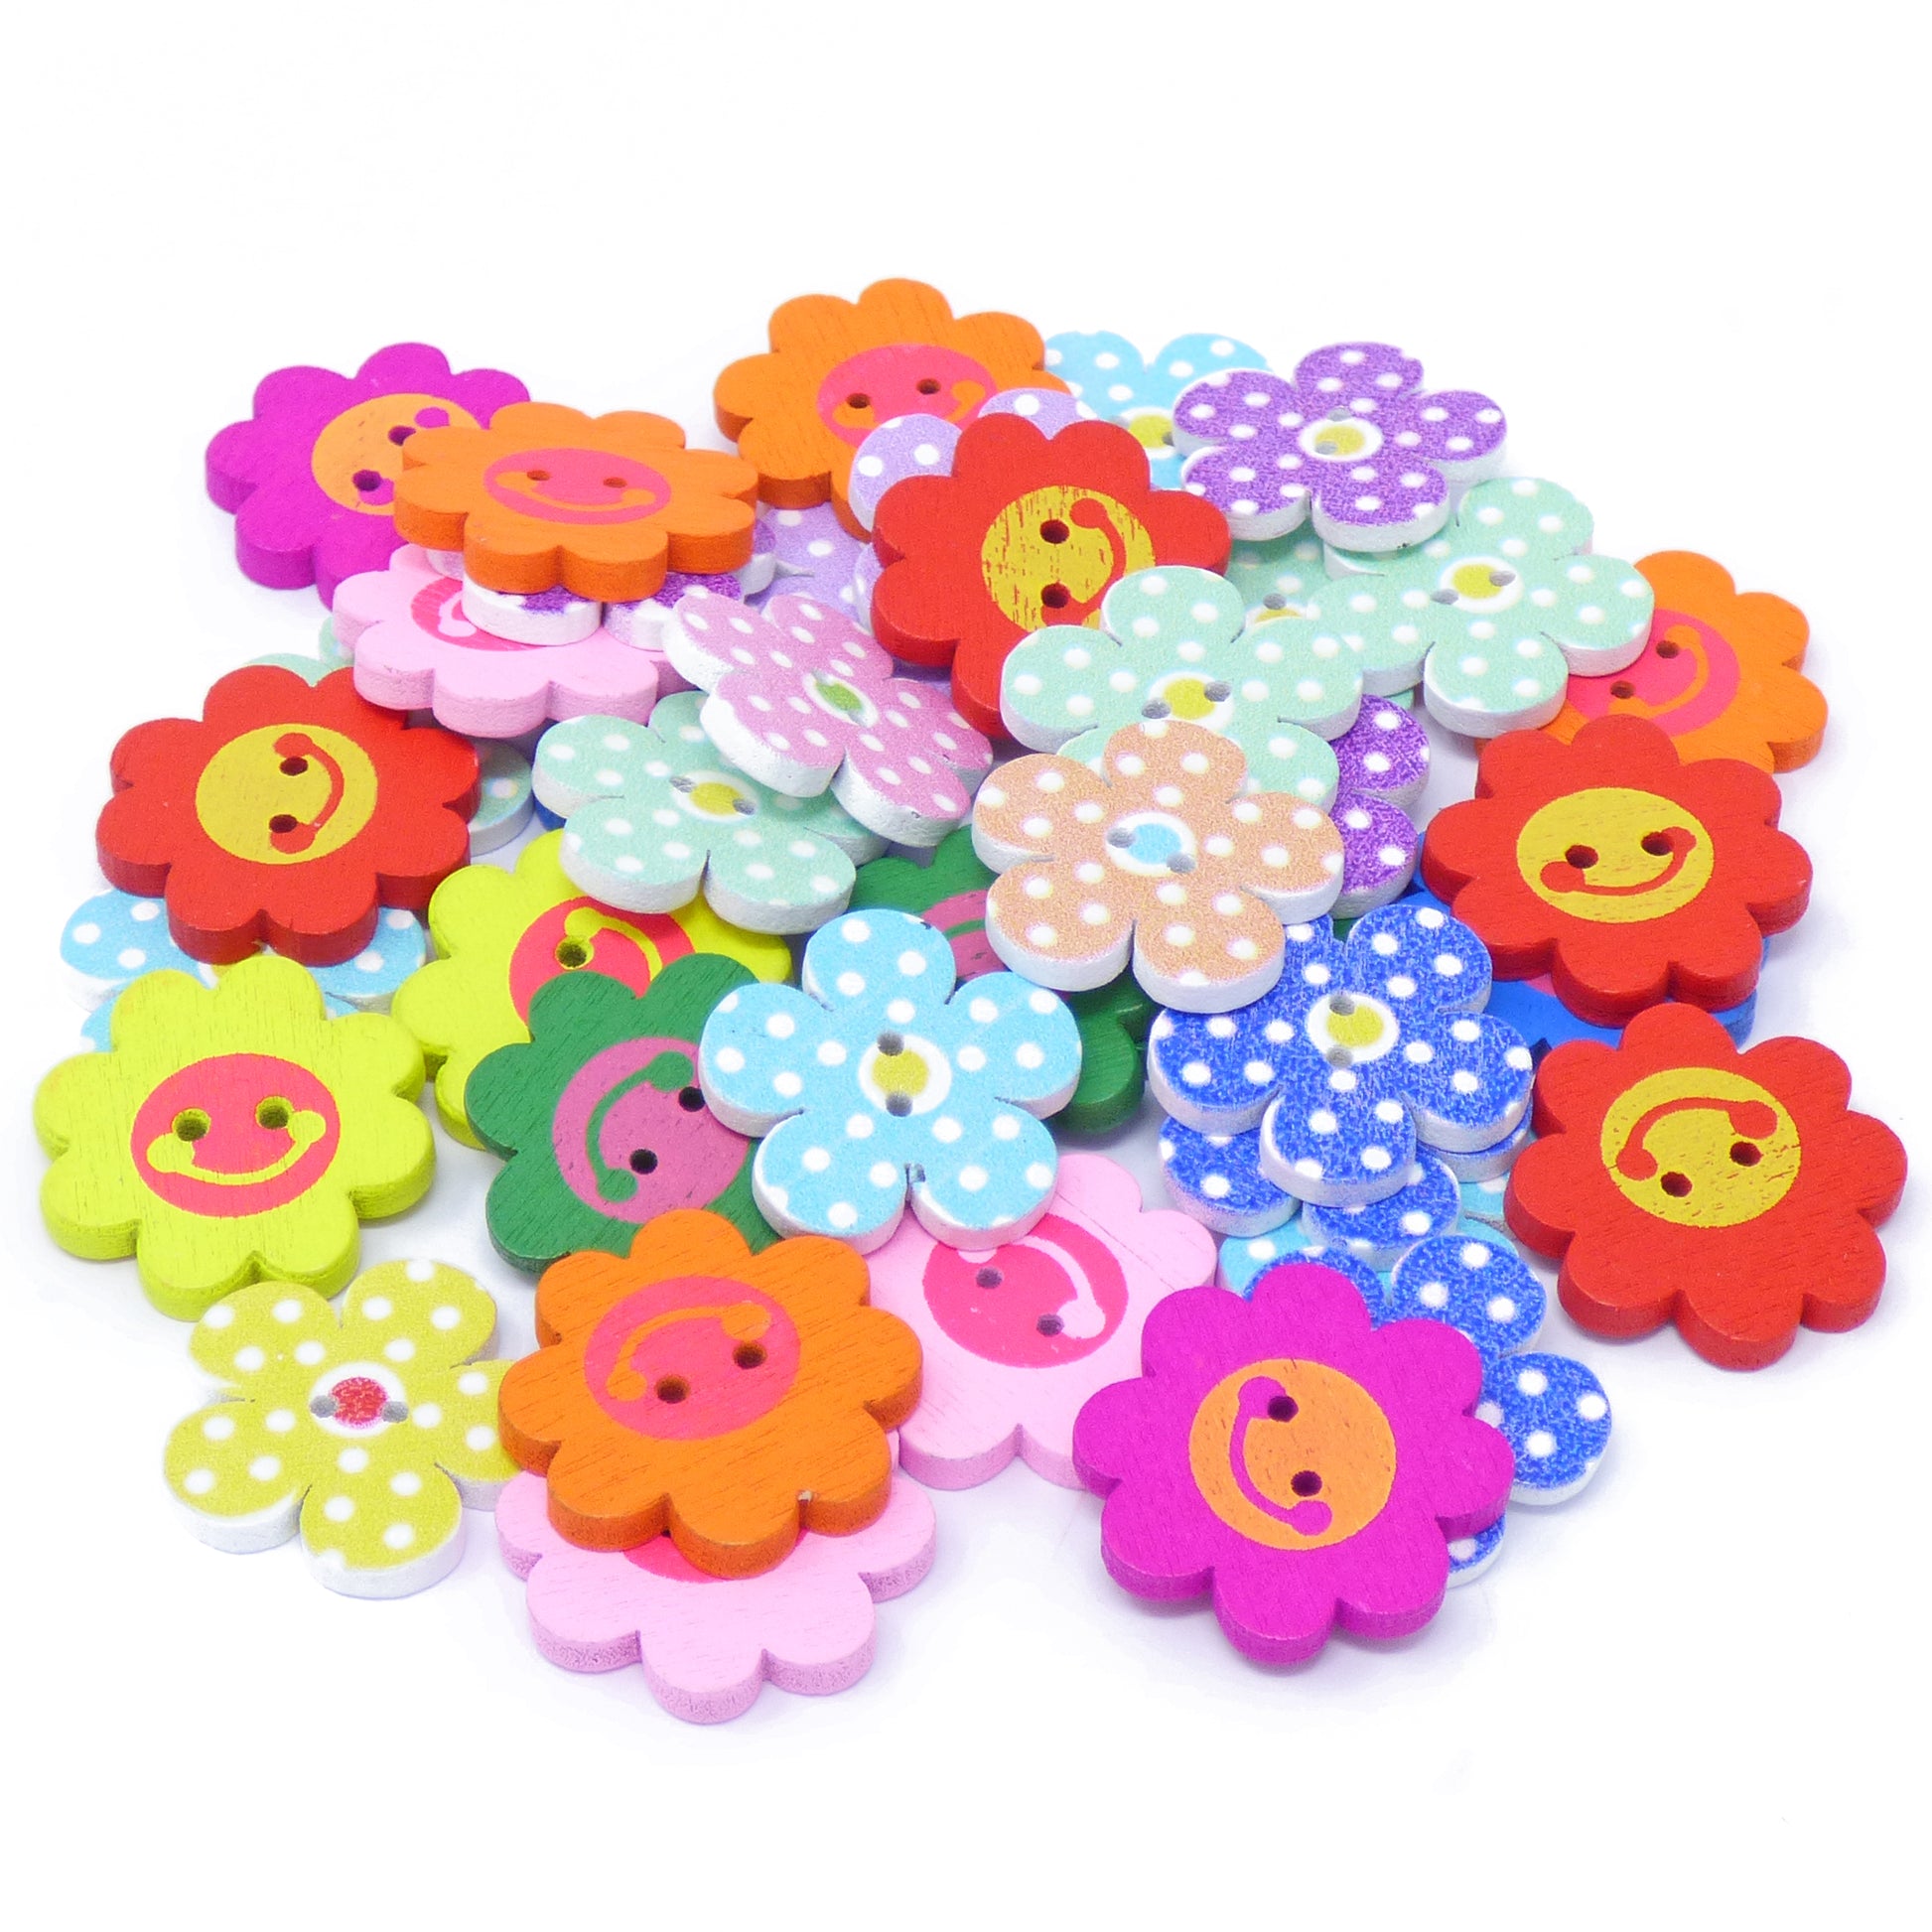 Flower 40 Mixed Bright Flower & Butterfly Buttons